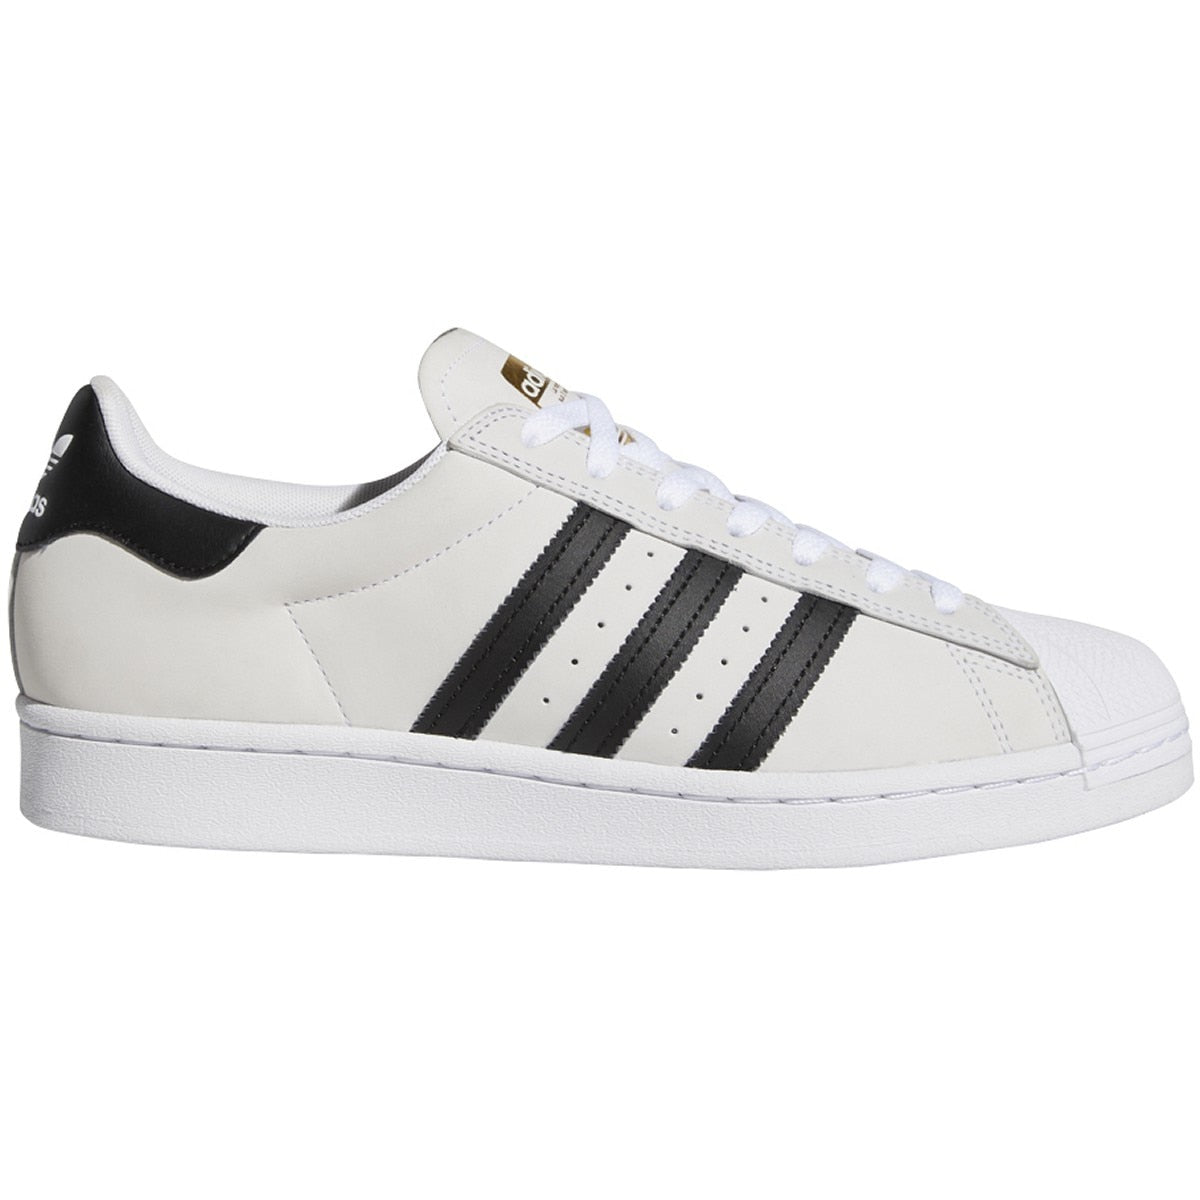 Adidas Superstar ADV Skate Shoe - White/Black/Gold